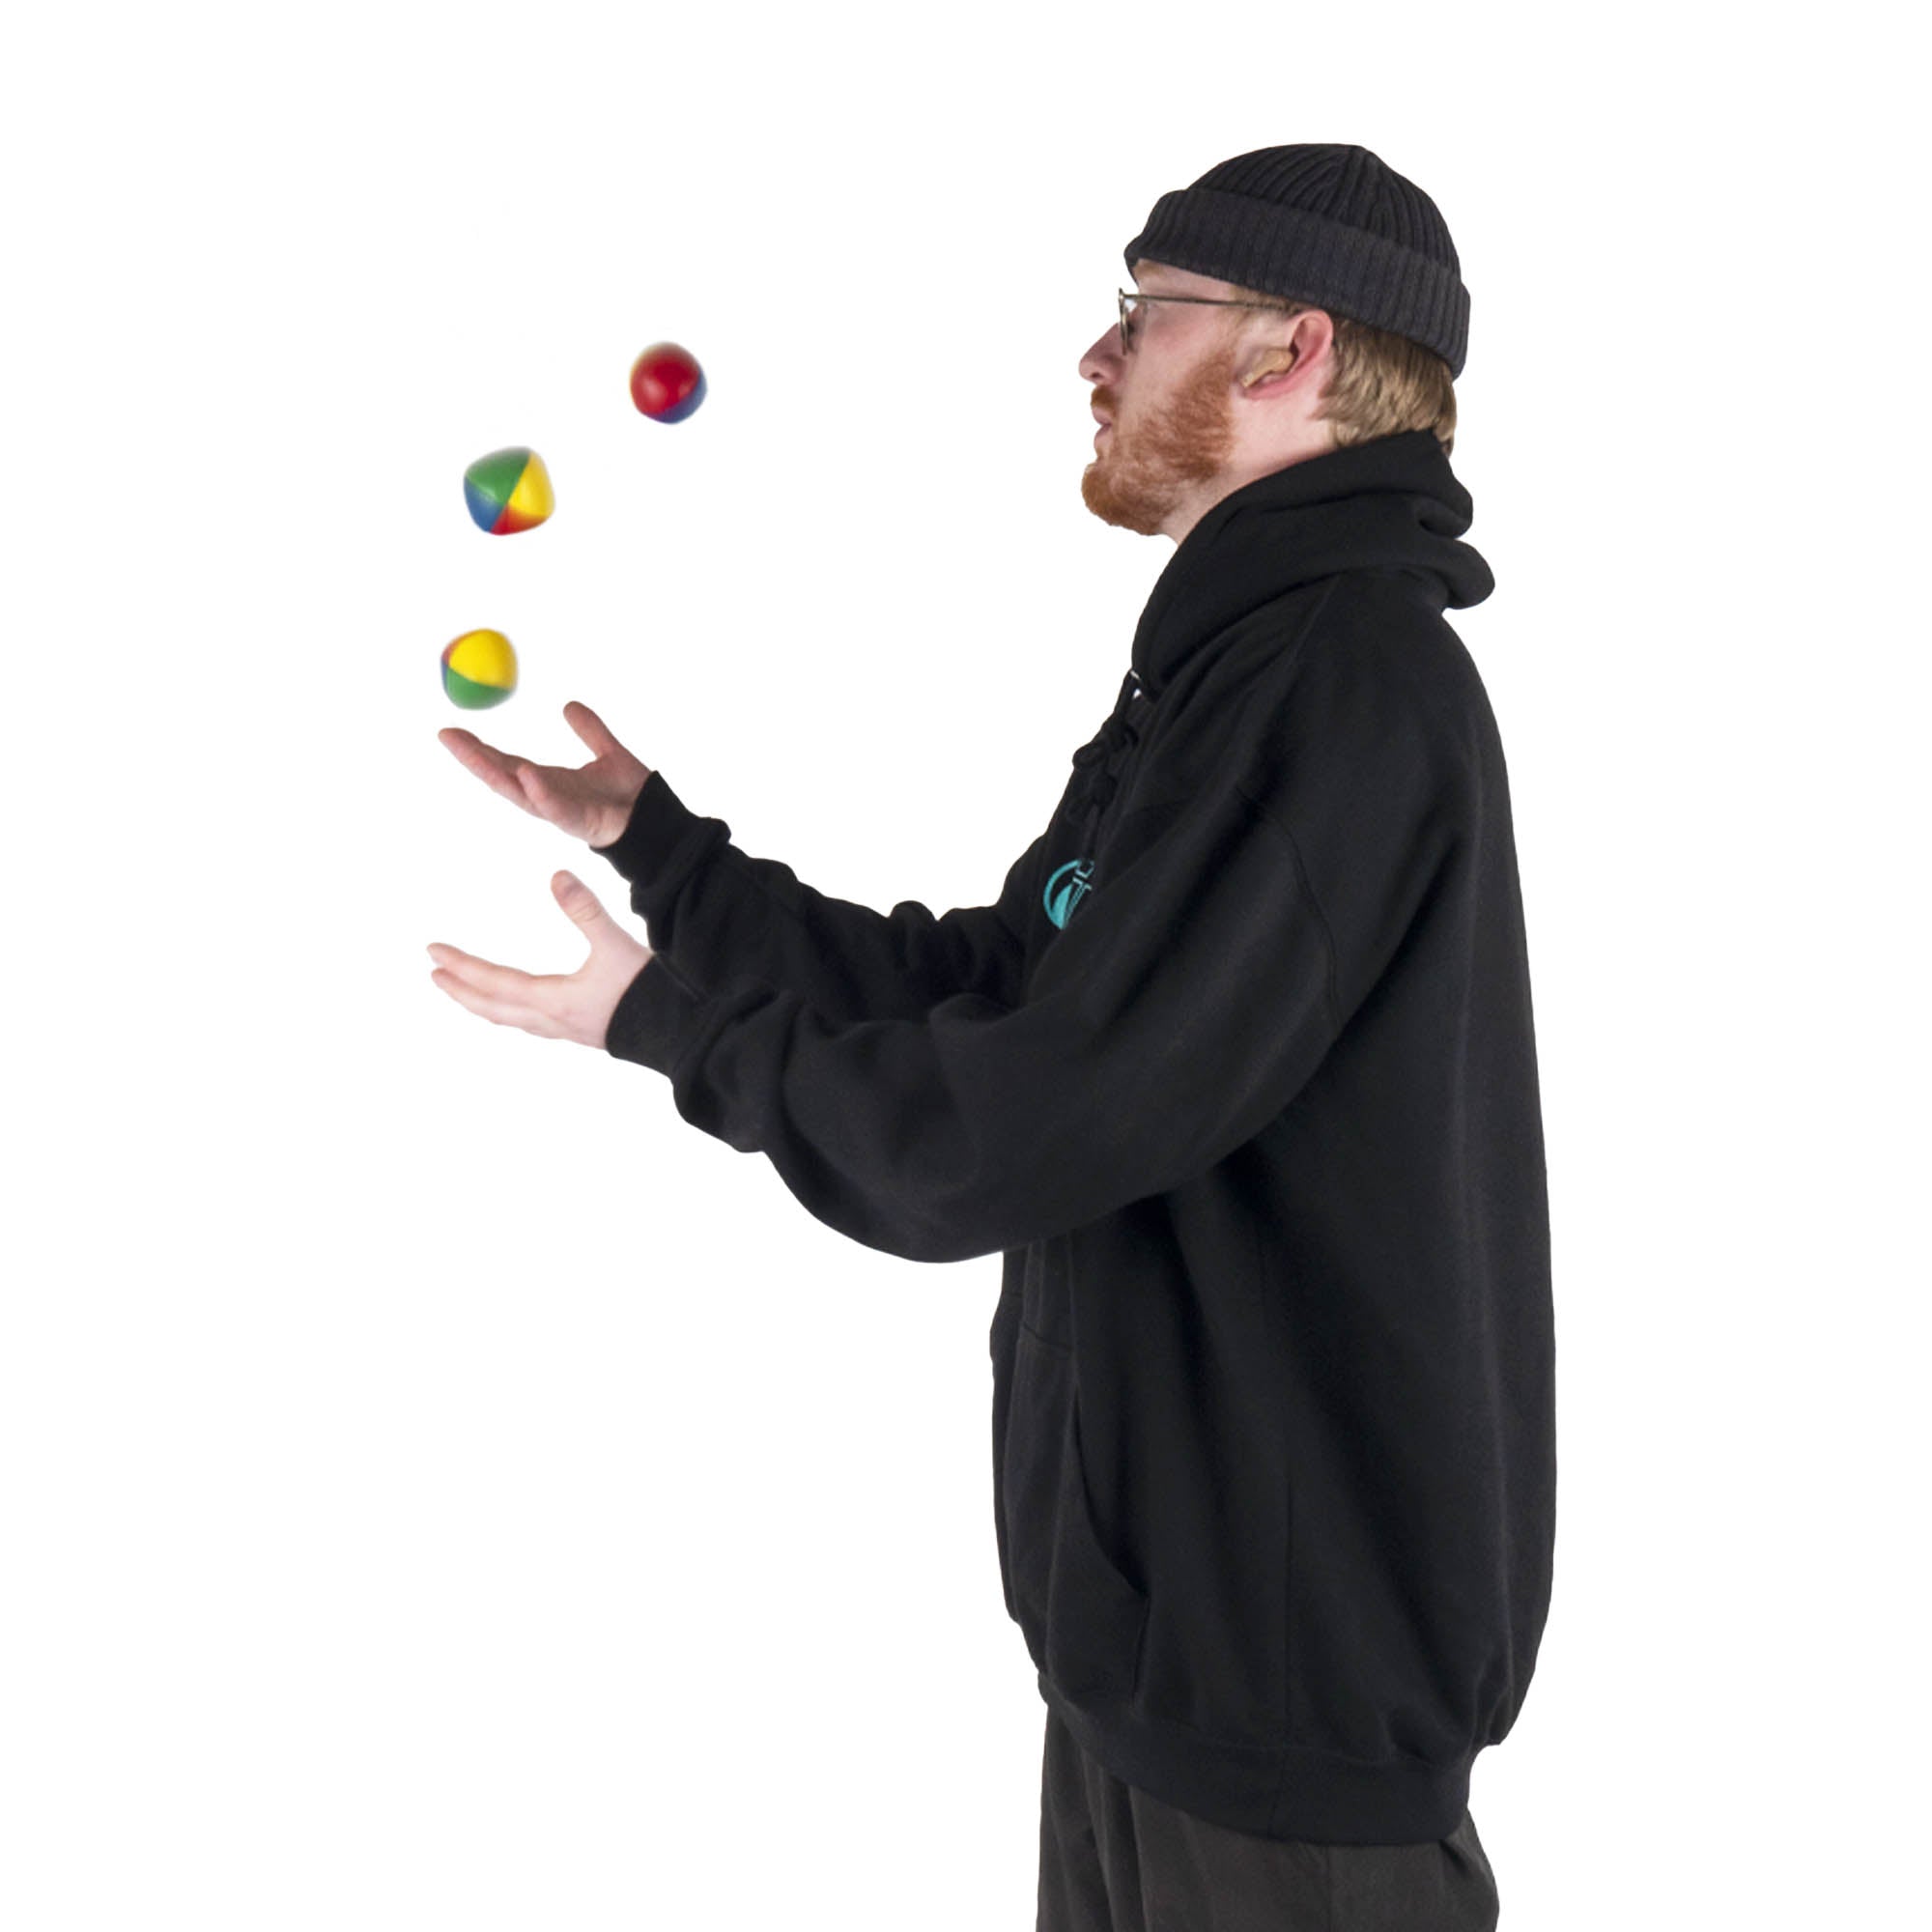 juggling 3 balls